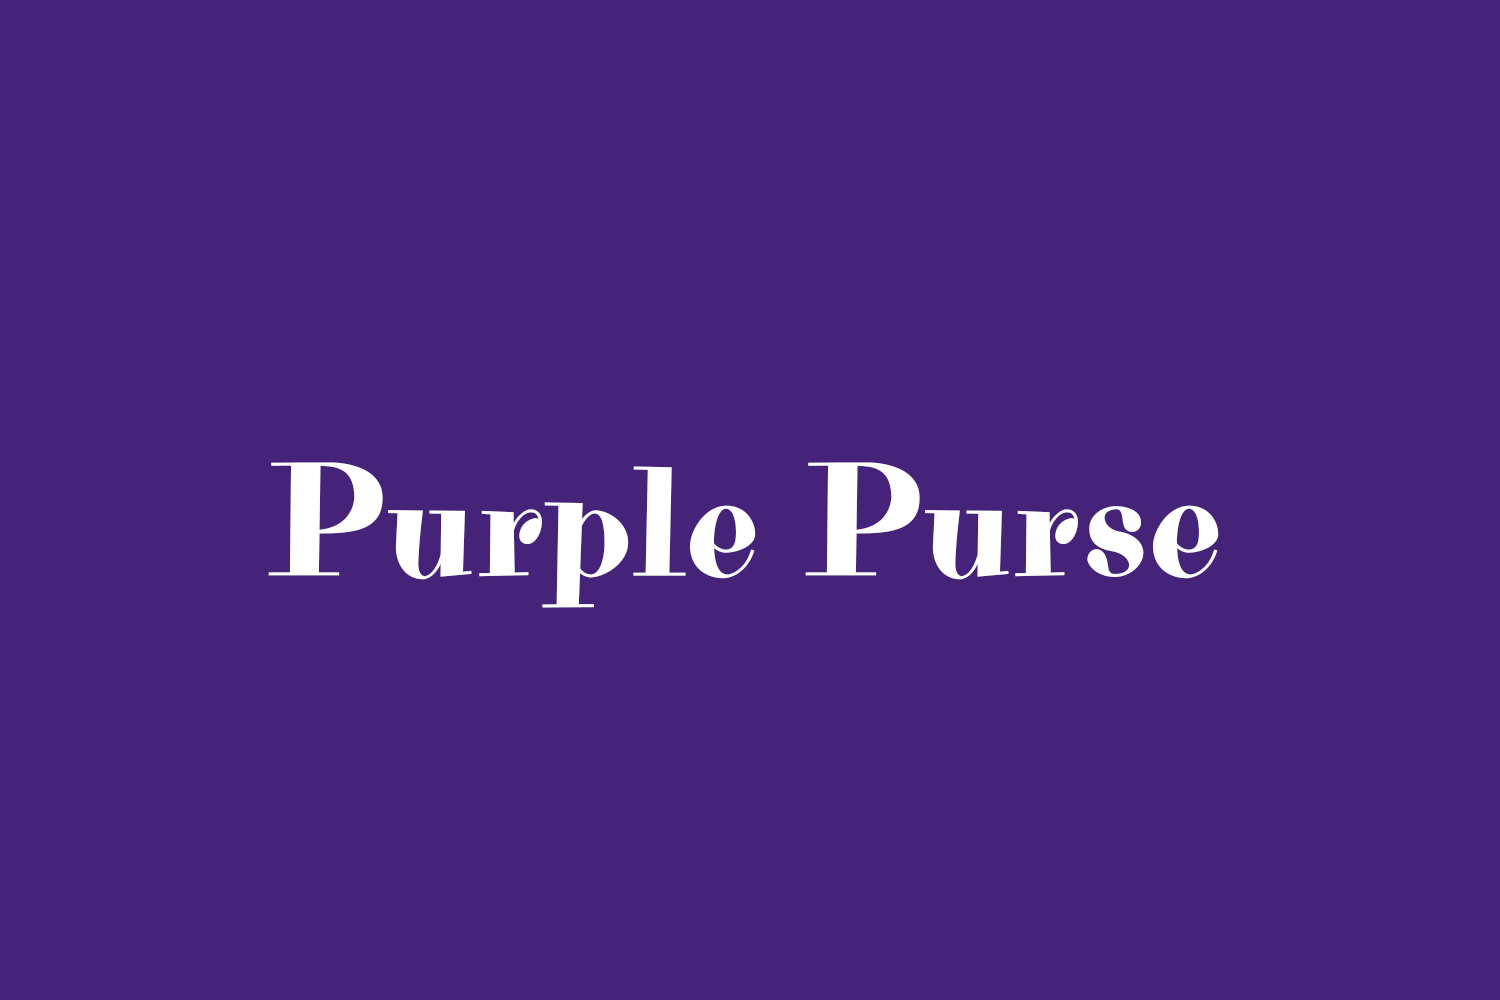 Premium AI Image | Purple purse with green diamond design on strap on white  surface generative ai